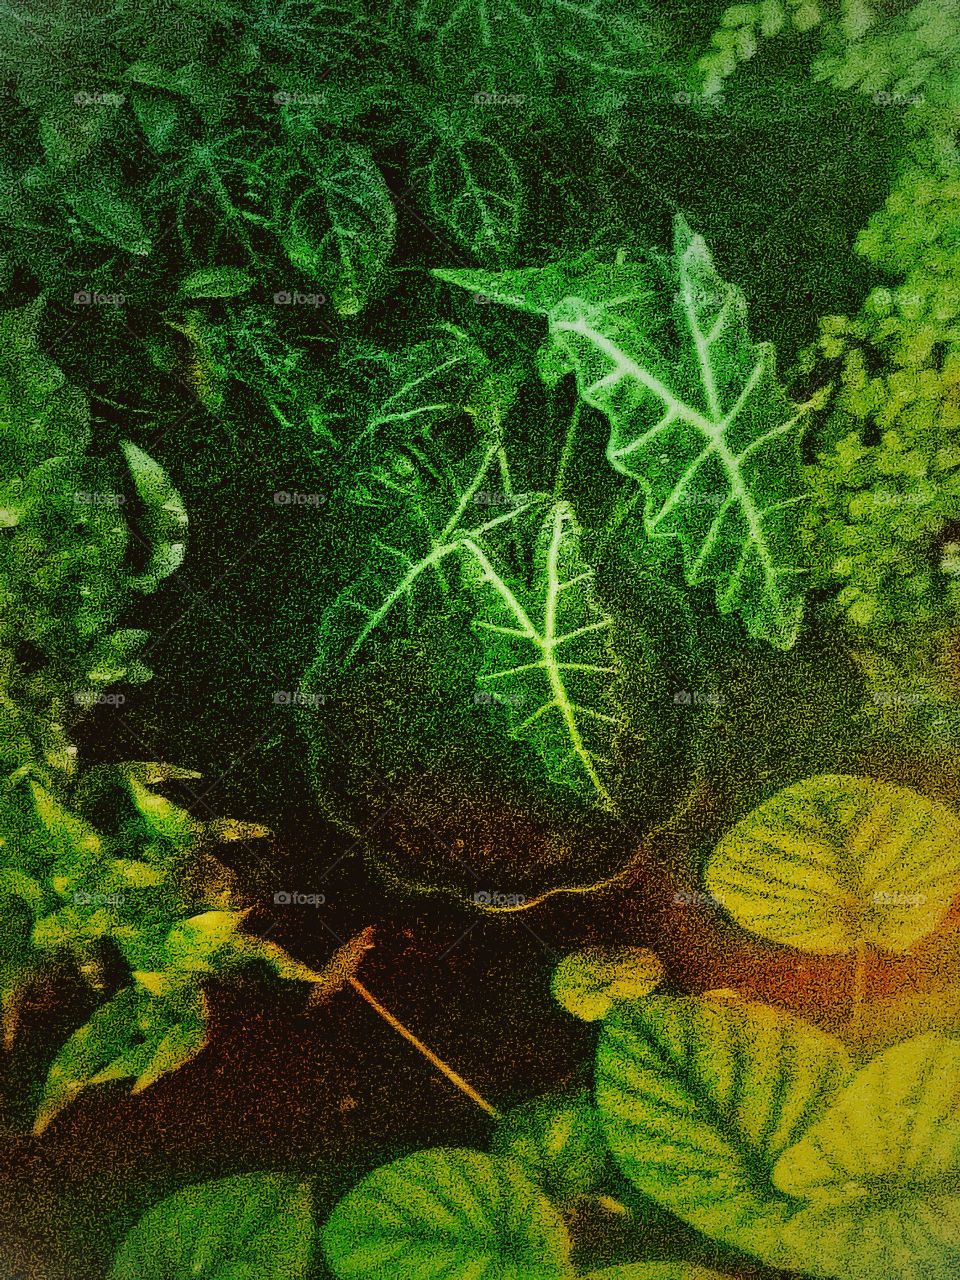 the Green Grain of Portrait of Plants